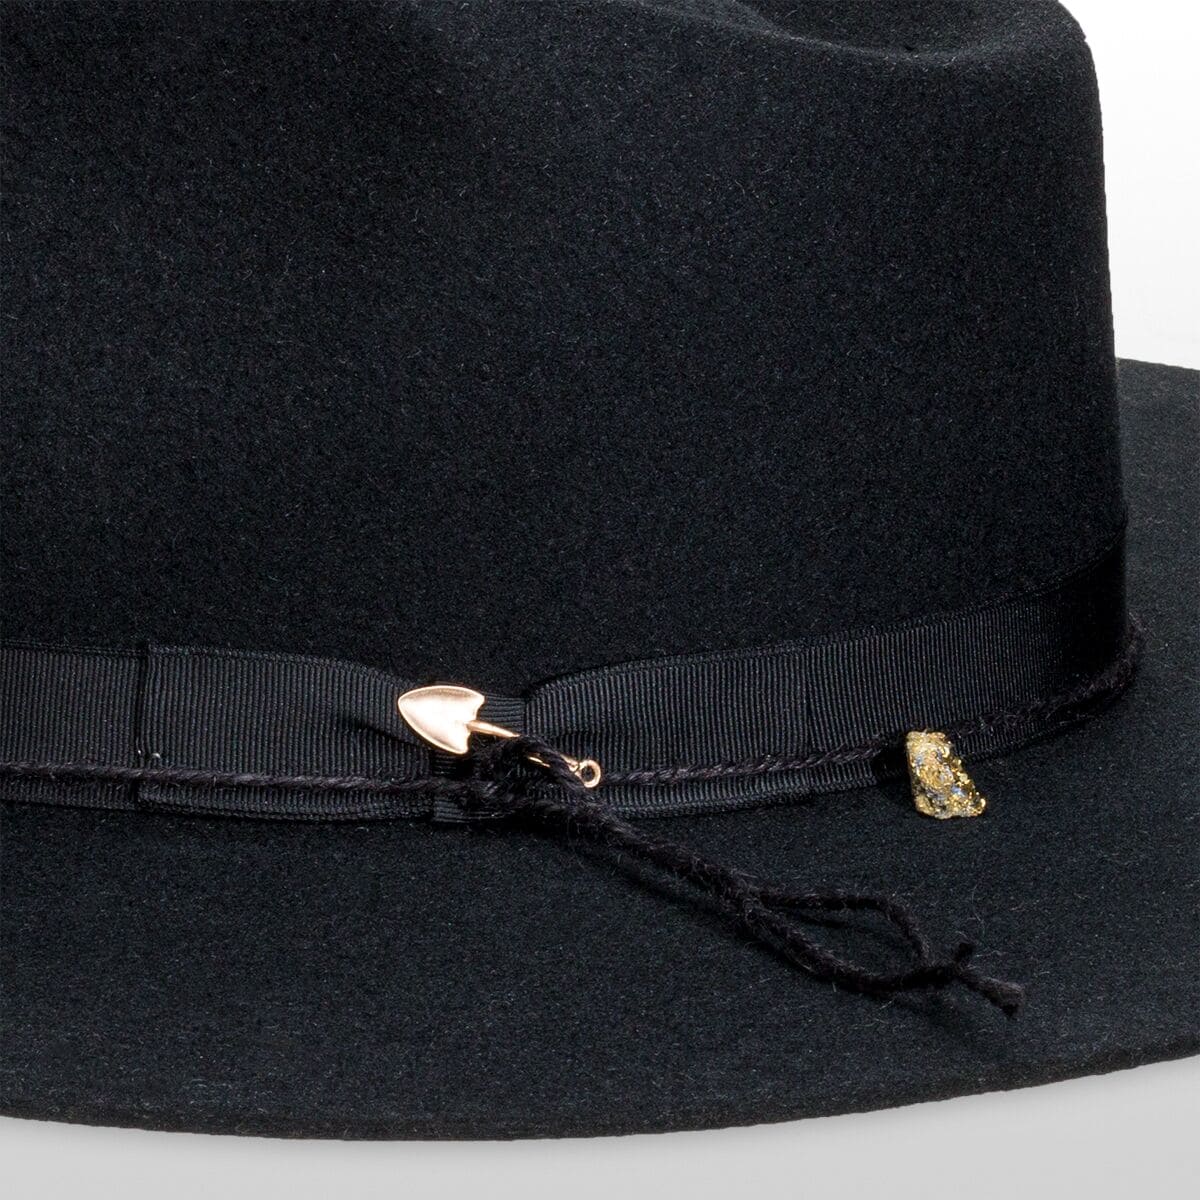 Stetson JW Marshall Hat - Accessories